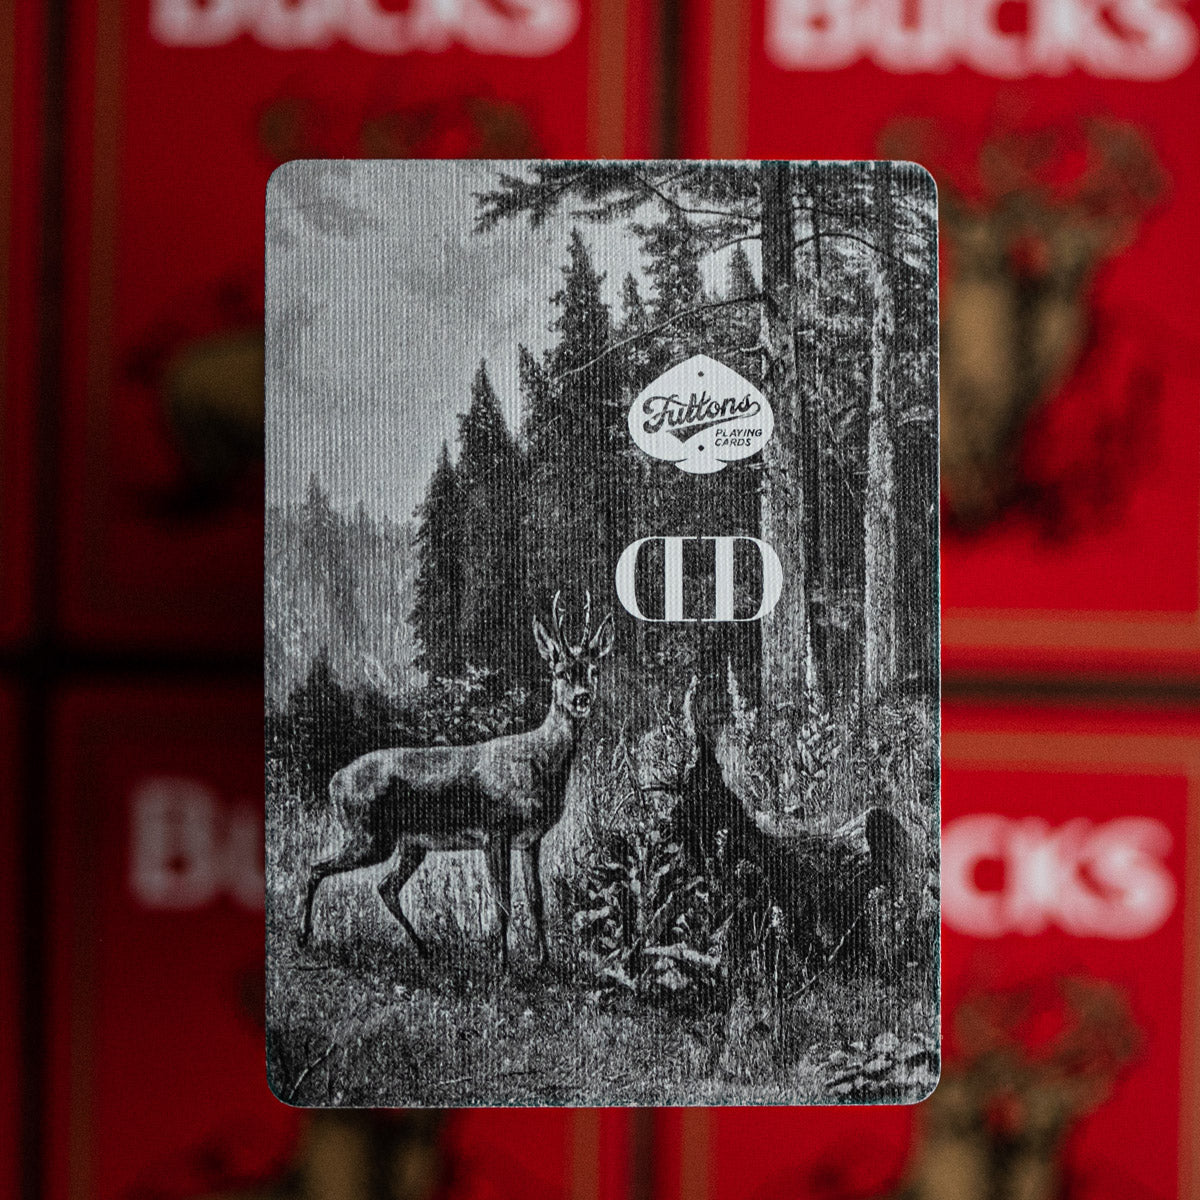 Bucks Souvenir Playing Cards